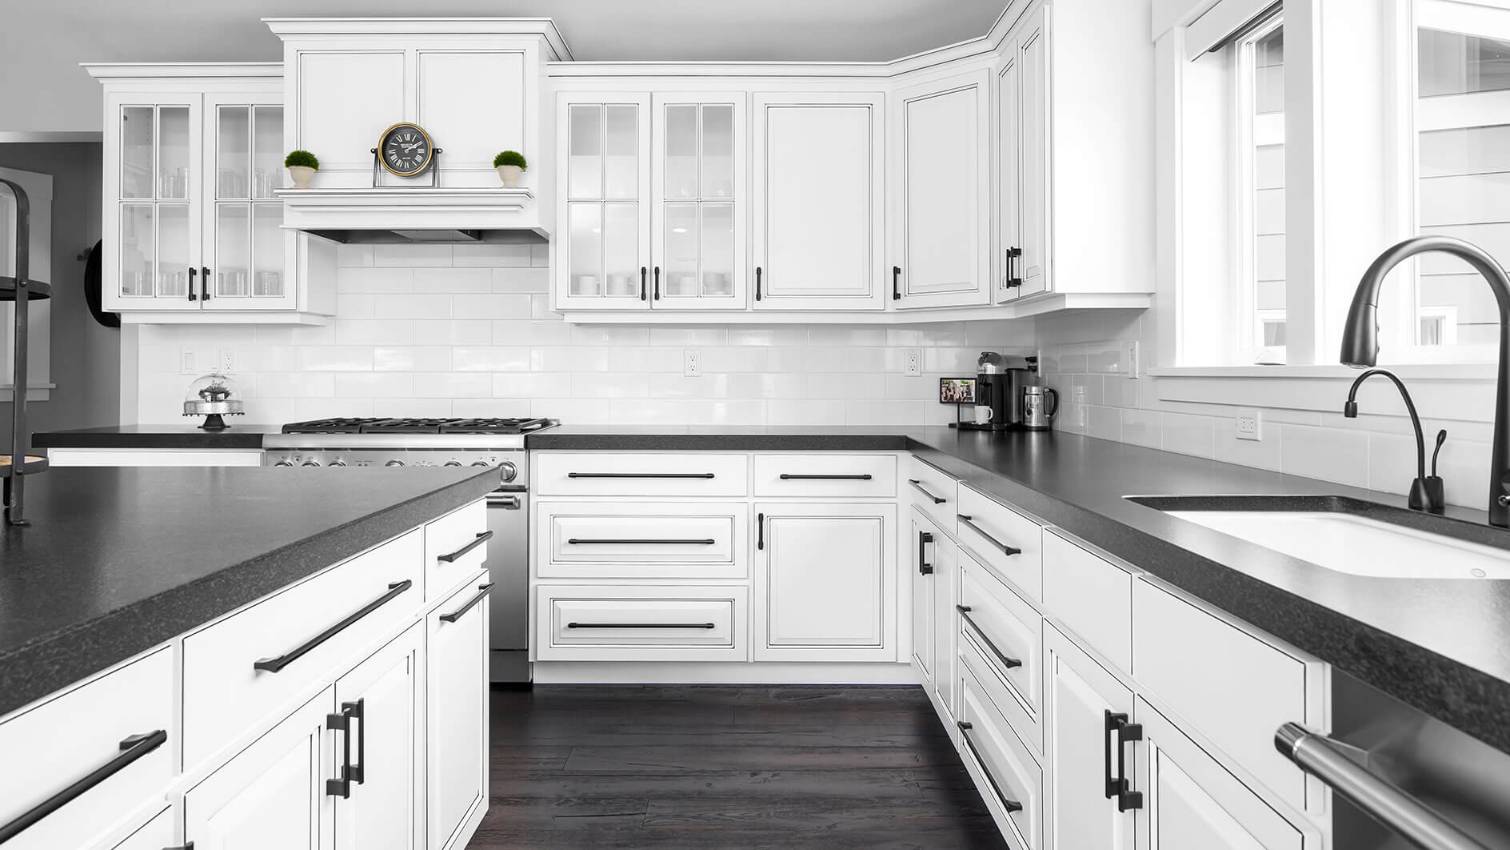 Kitchen backsplash ideas for white cabinets black countertops